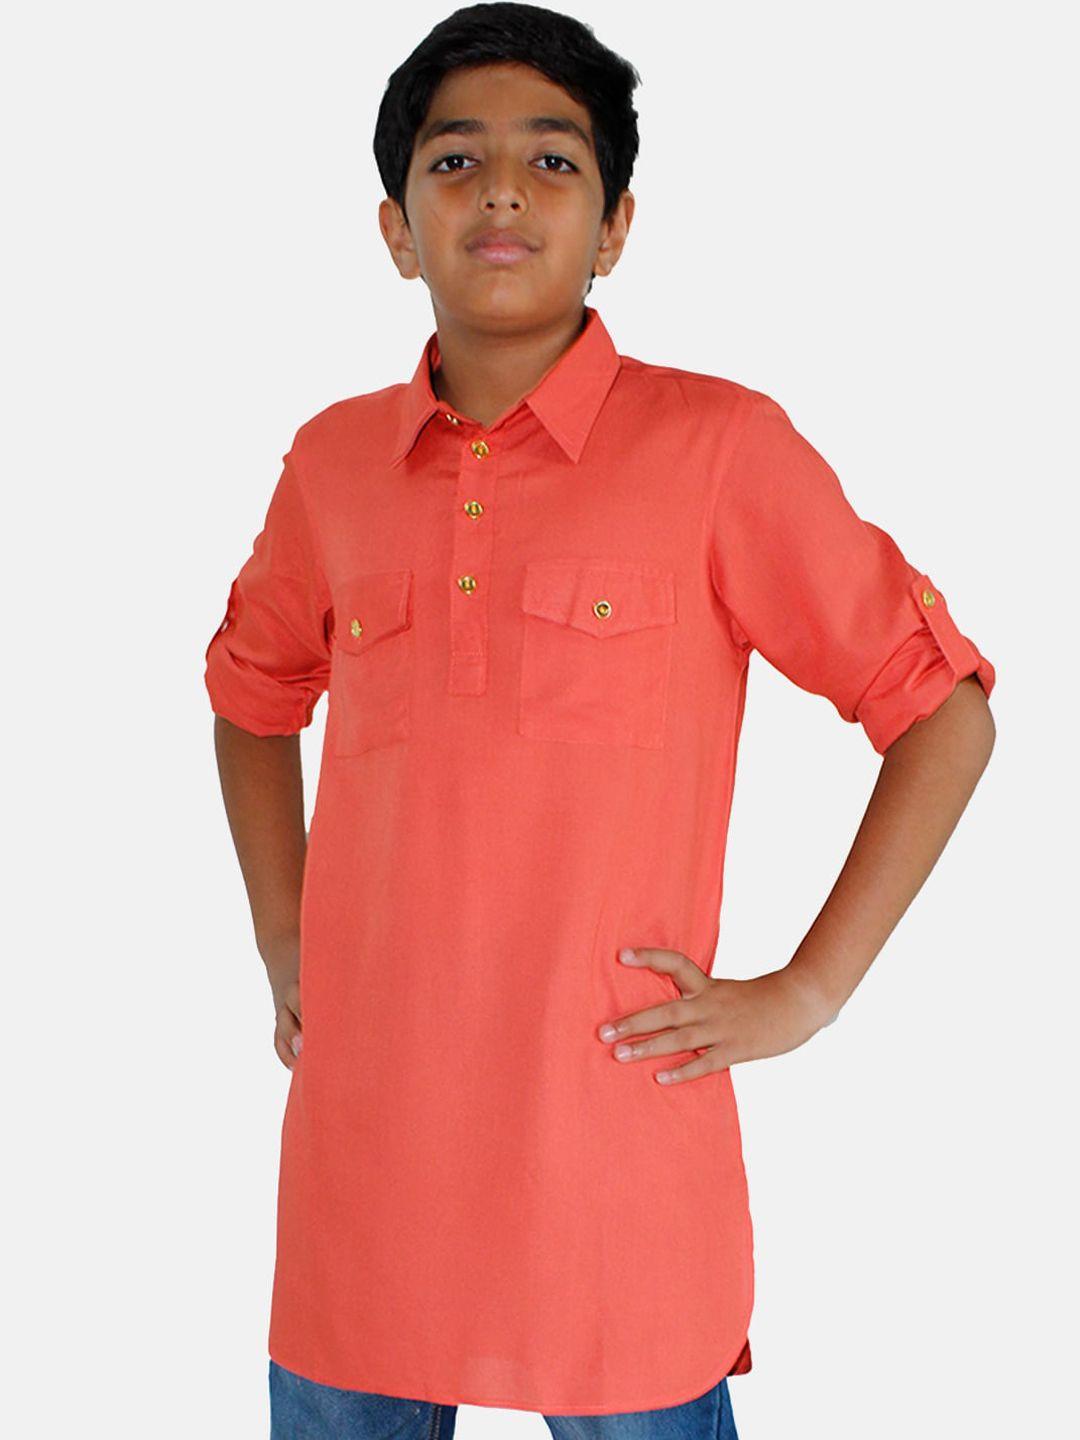 kiddopanti boys shirt collar pathani kurta